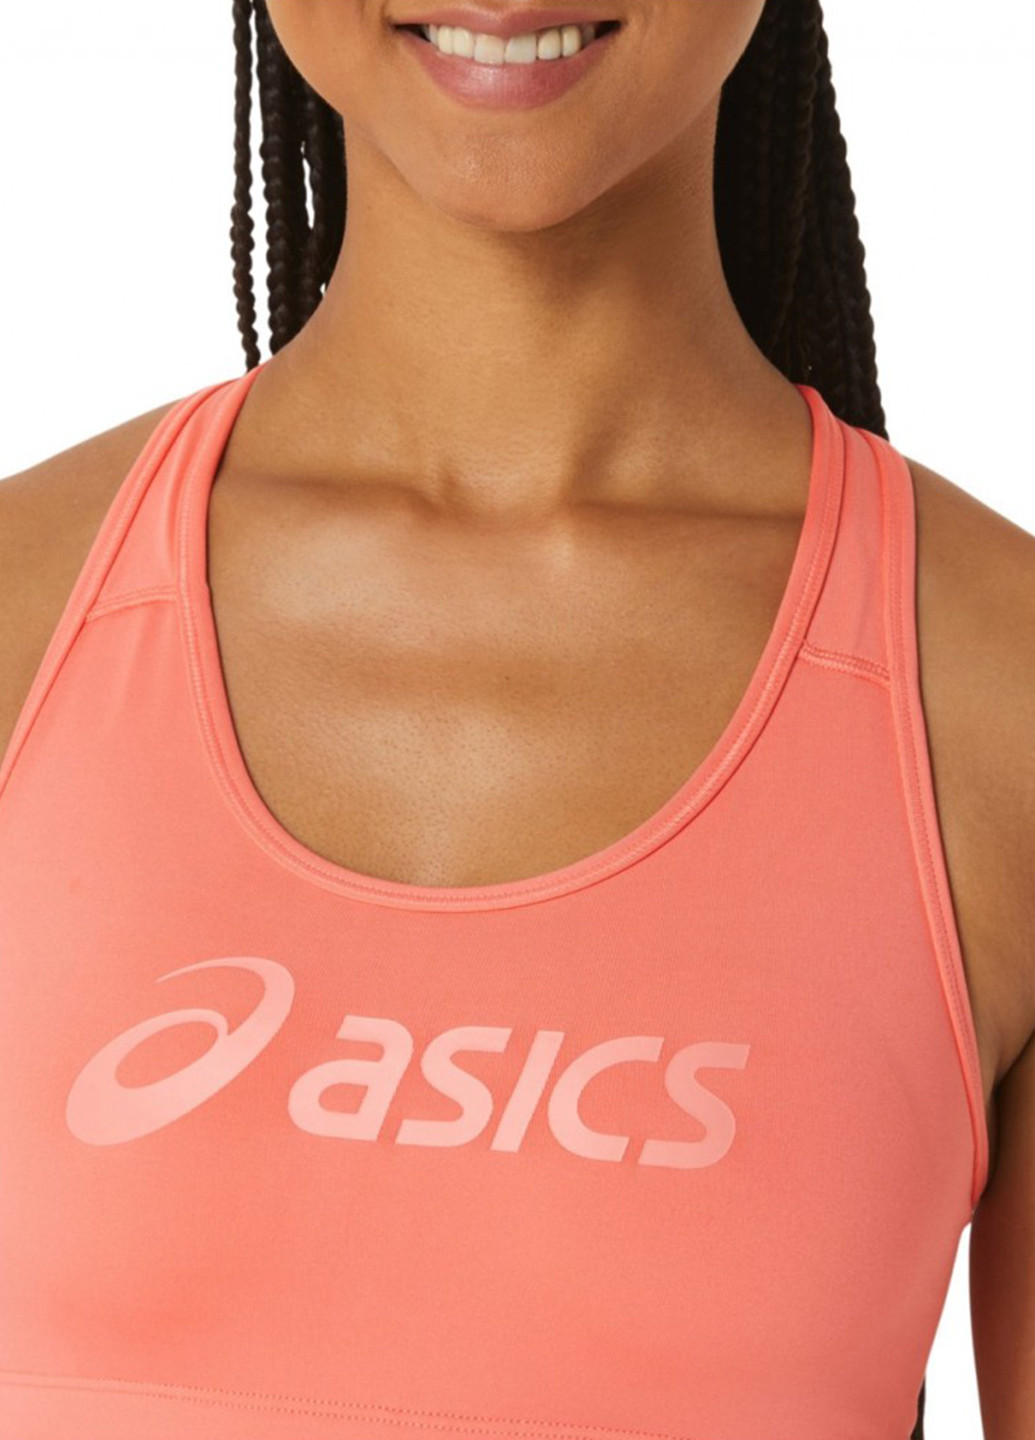 Топ Asics women's core asics logo bra (257973663)